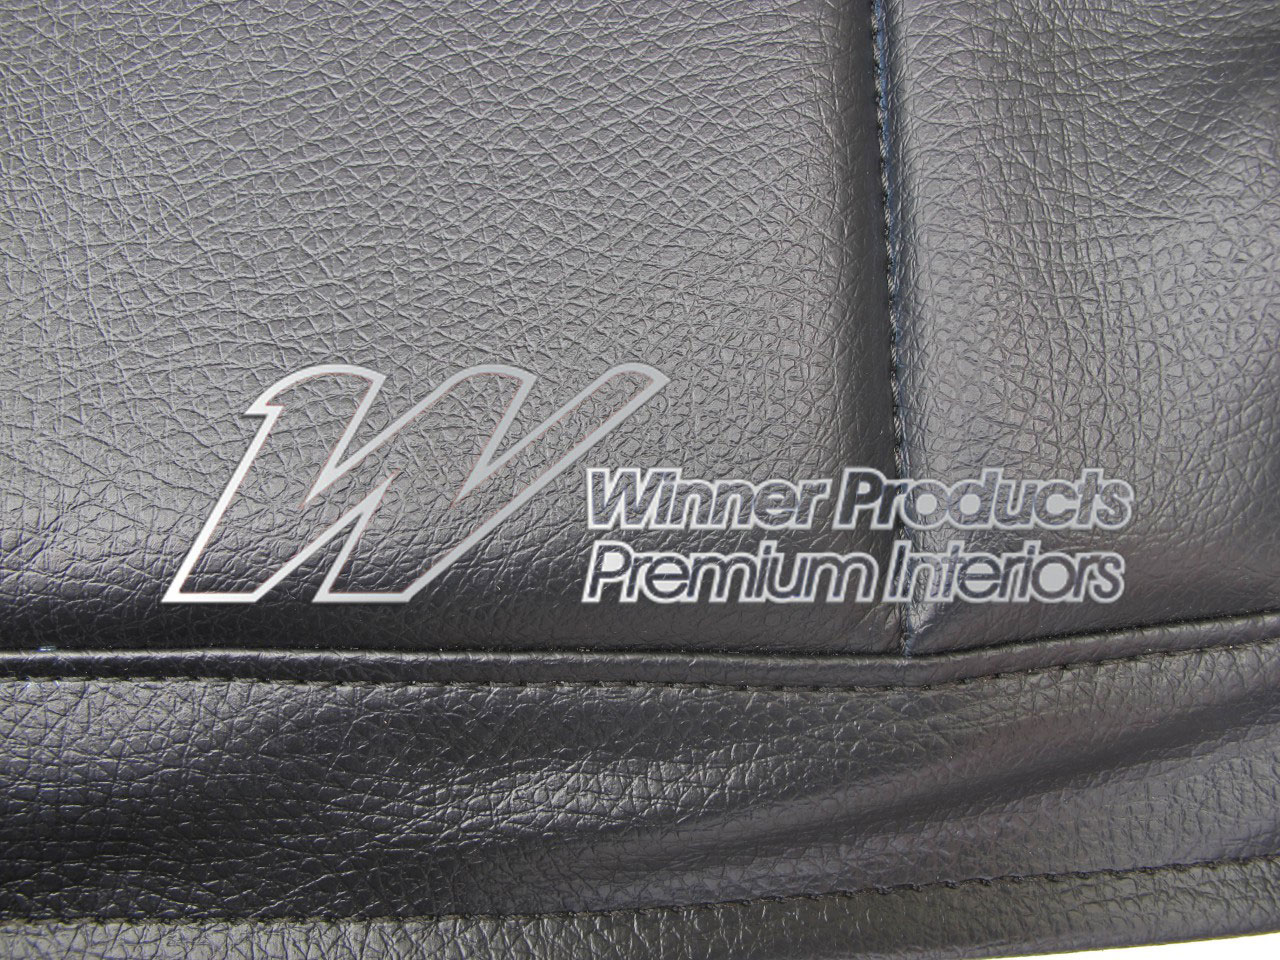 Holden Premier HT Premier Sedan 10R Black Seat Covers (Image 5 of 6)